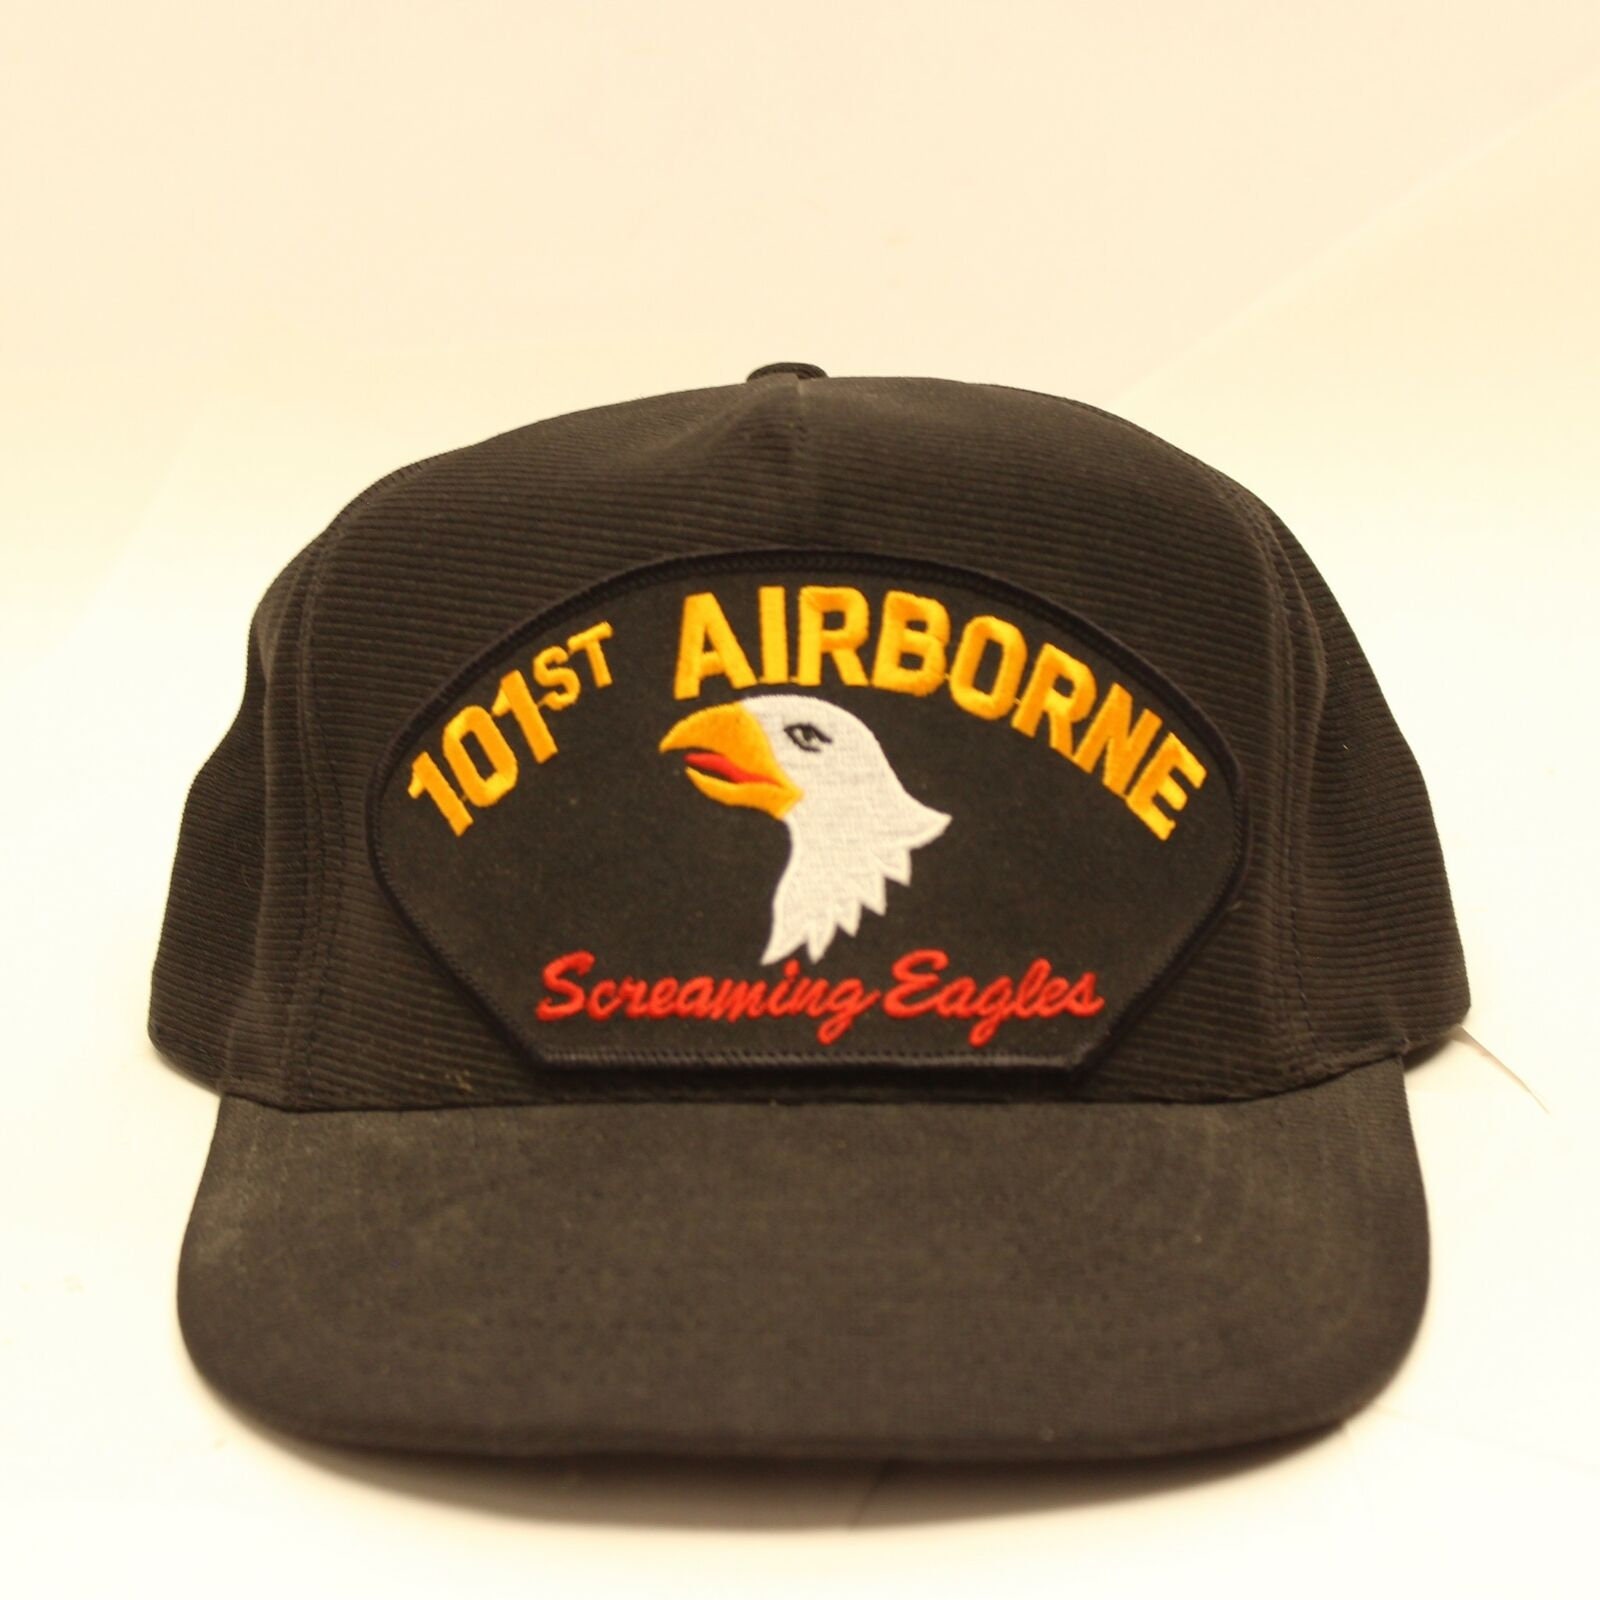 Khaki US 101st Airborne Baseball Kappe Spitze Sommerhut Schreiend Eagles 